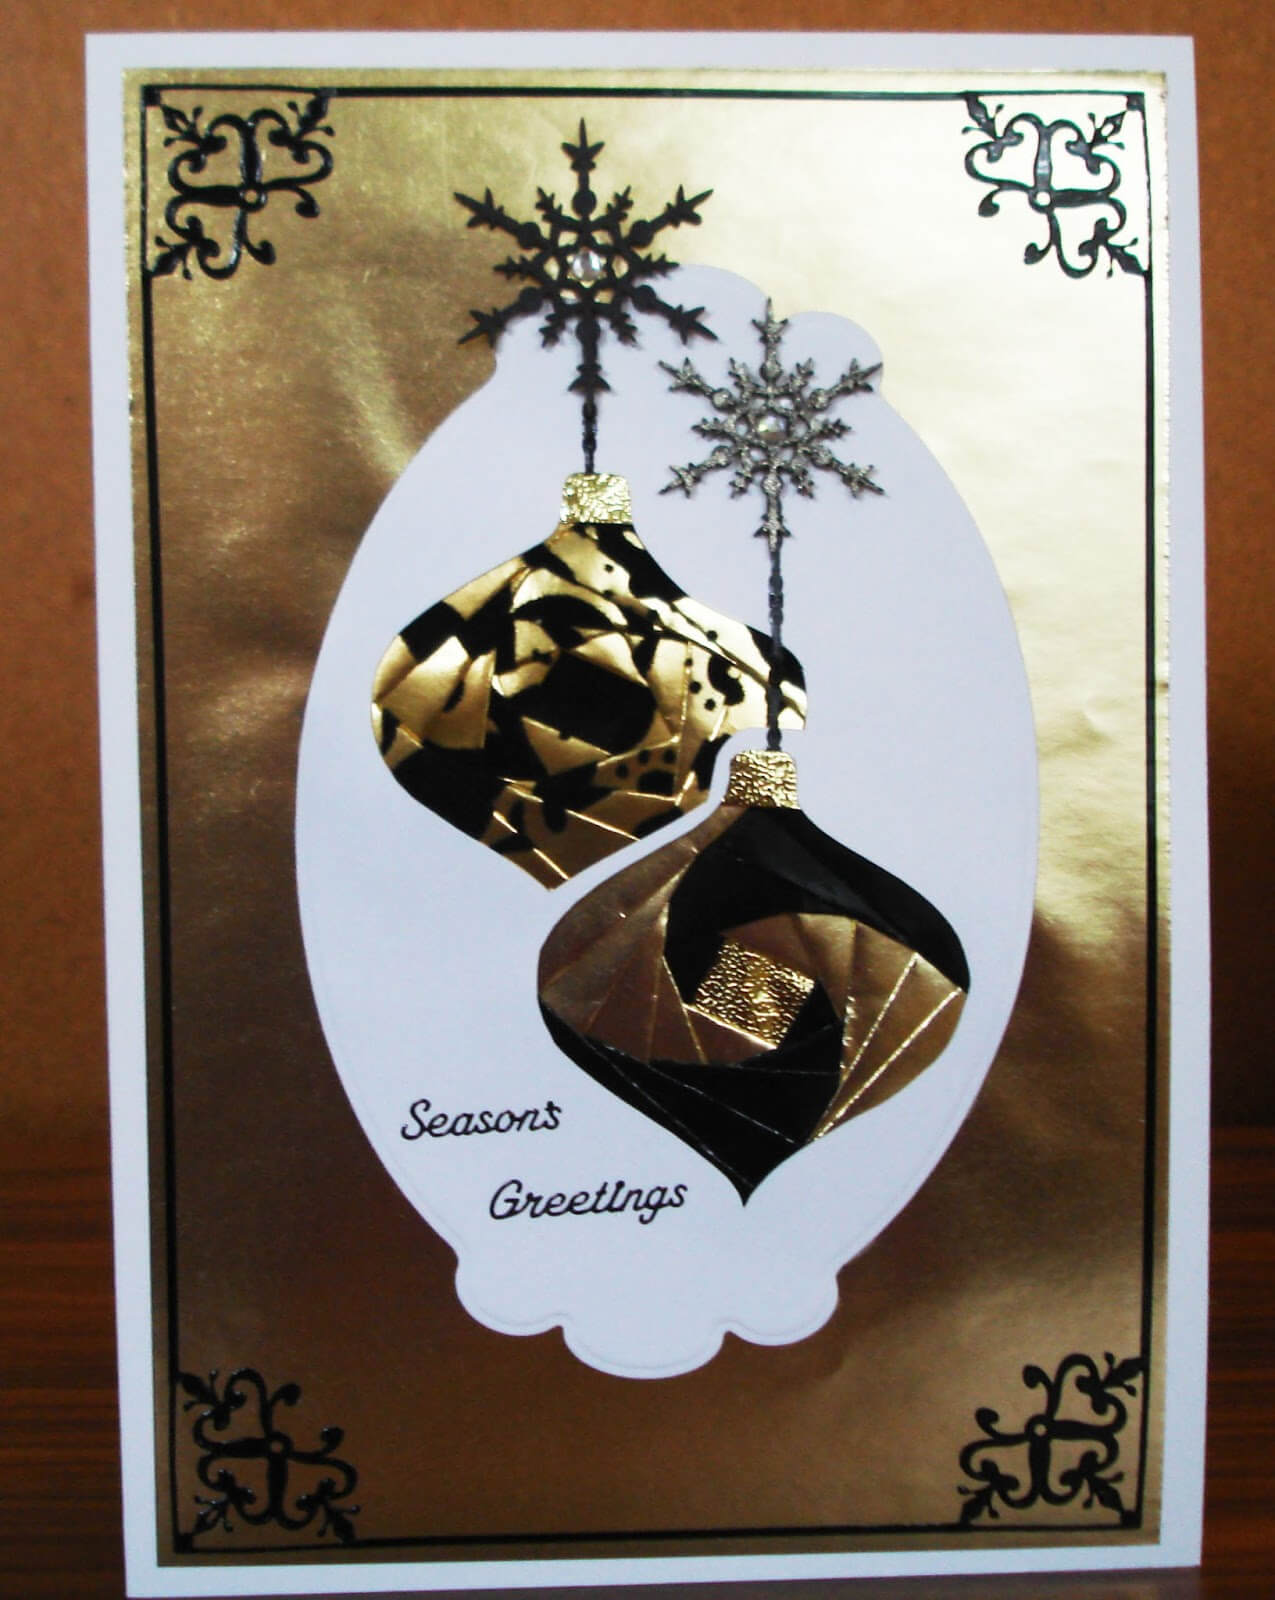 Lorraine Lives Here: Iris Folding Christmas Cards With Regard To Iris Folding Christmas Cards Templates